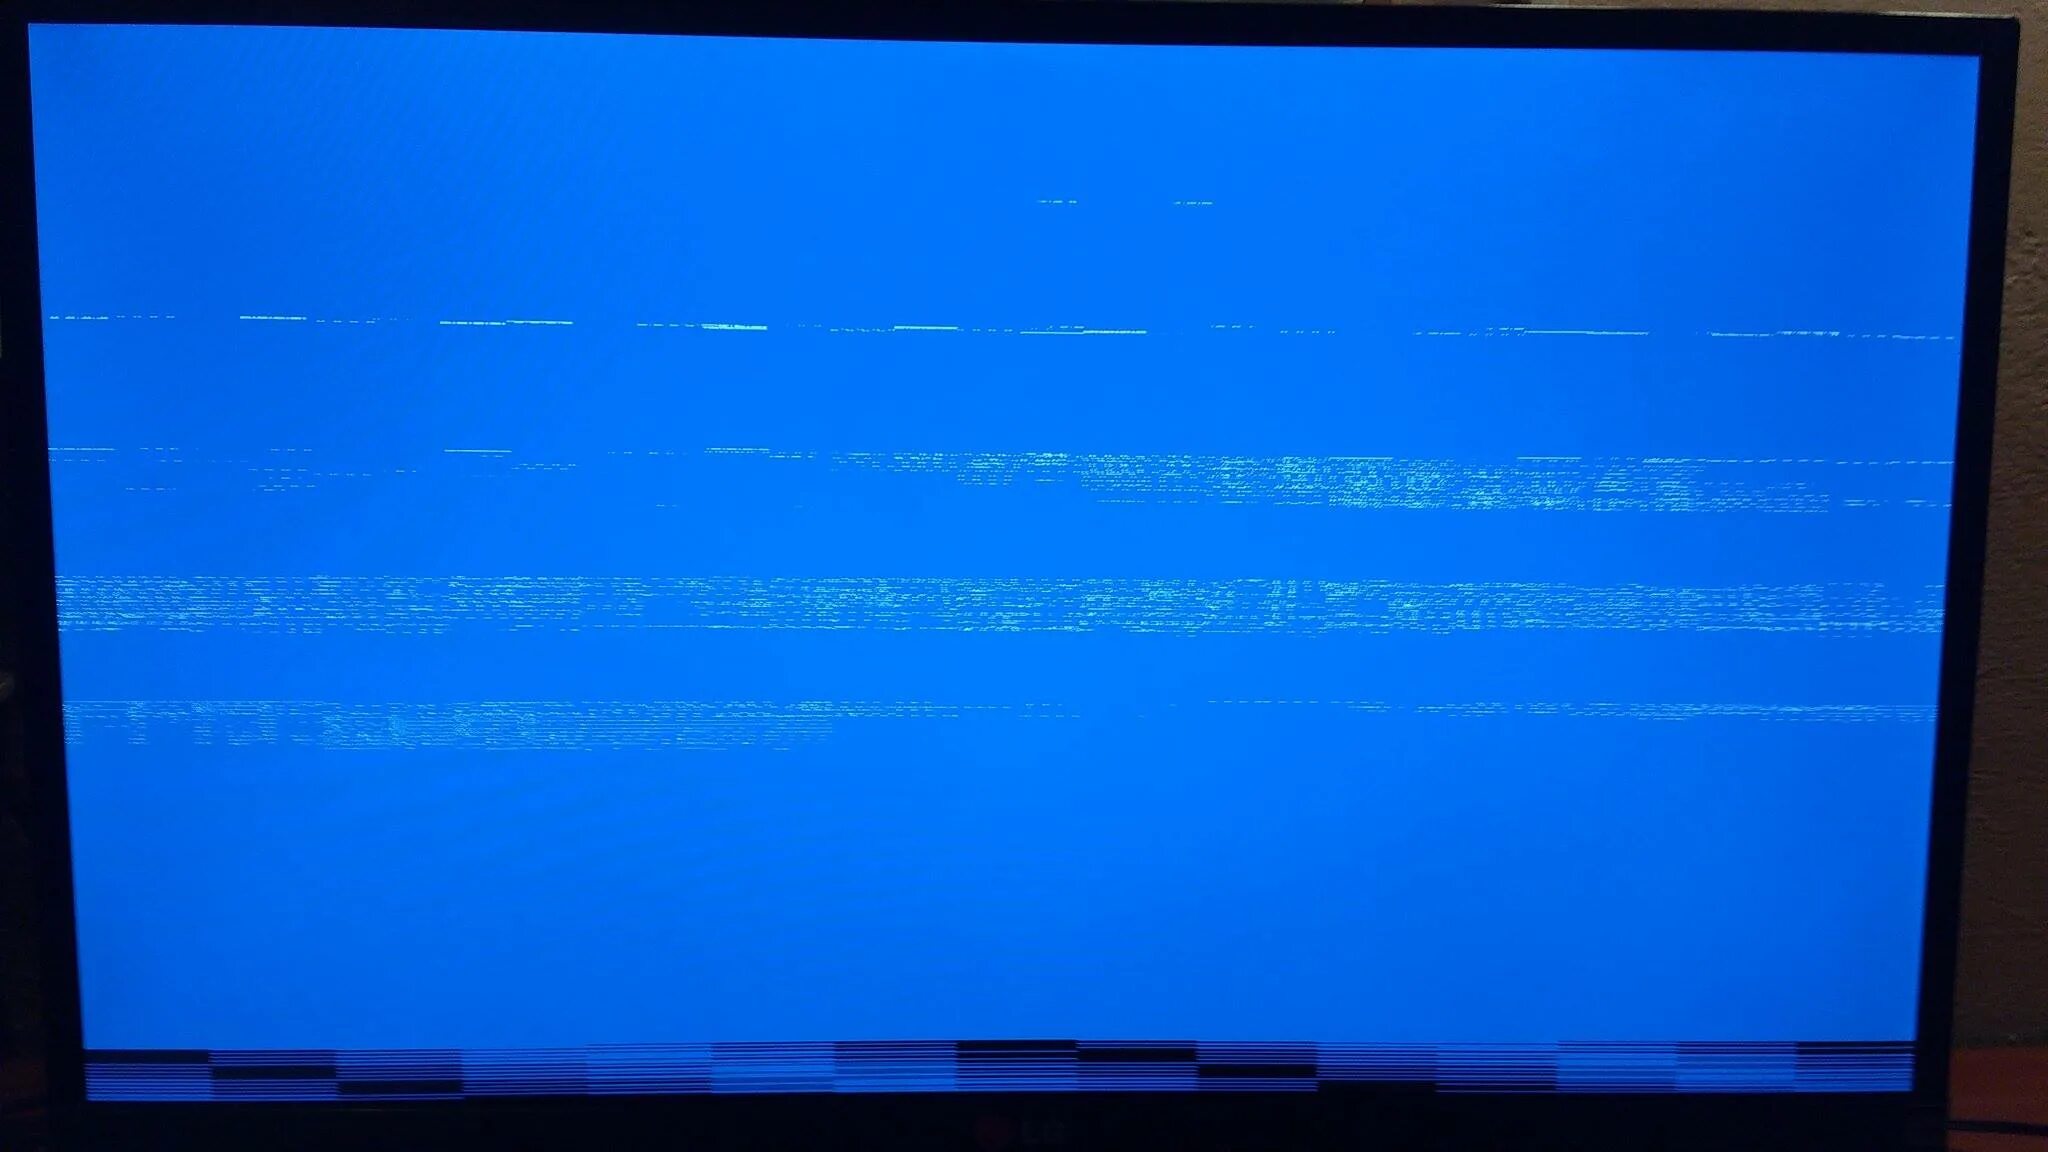 Артефакты видеокарты на виндовс 10. Артефакты на мониторе. Синий экран с полосками. Синие полосы на экране. Движущаяся точка на экране